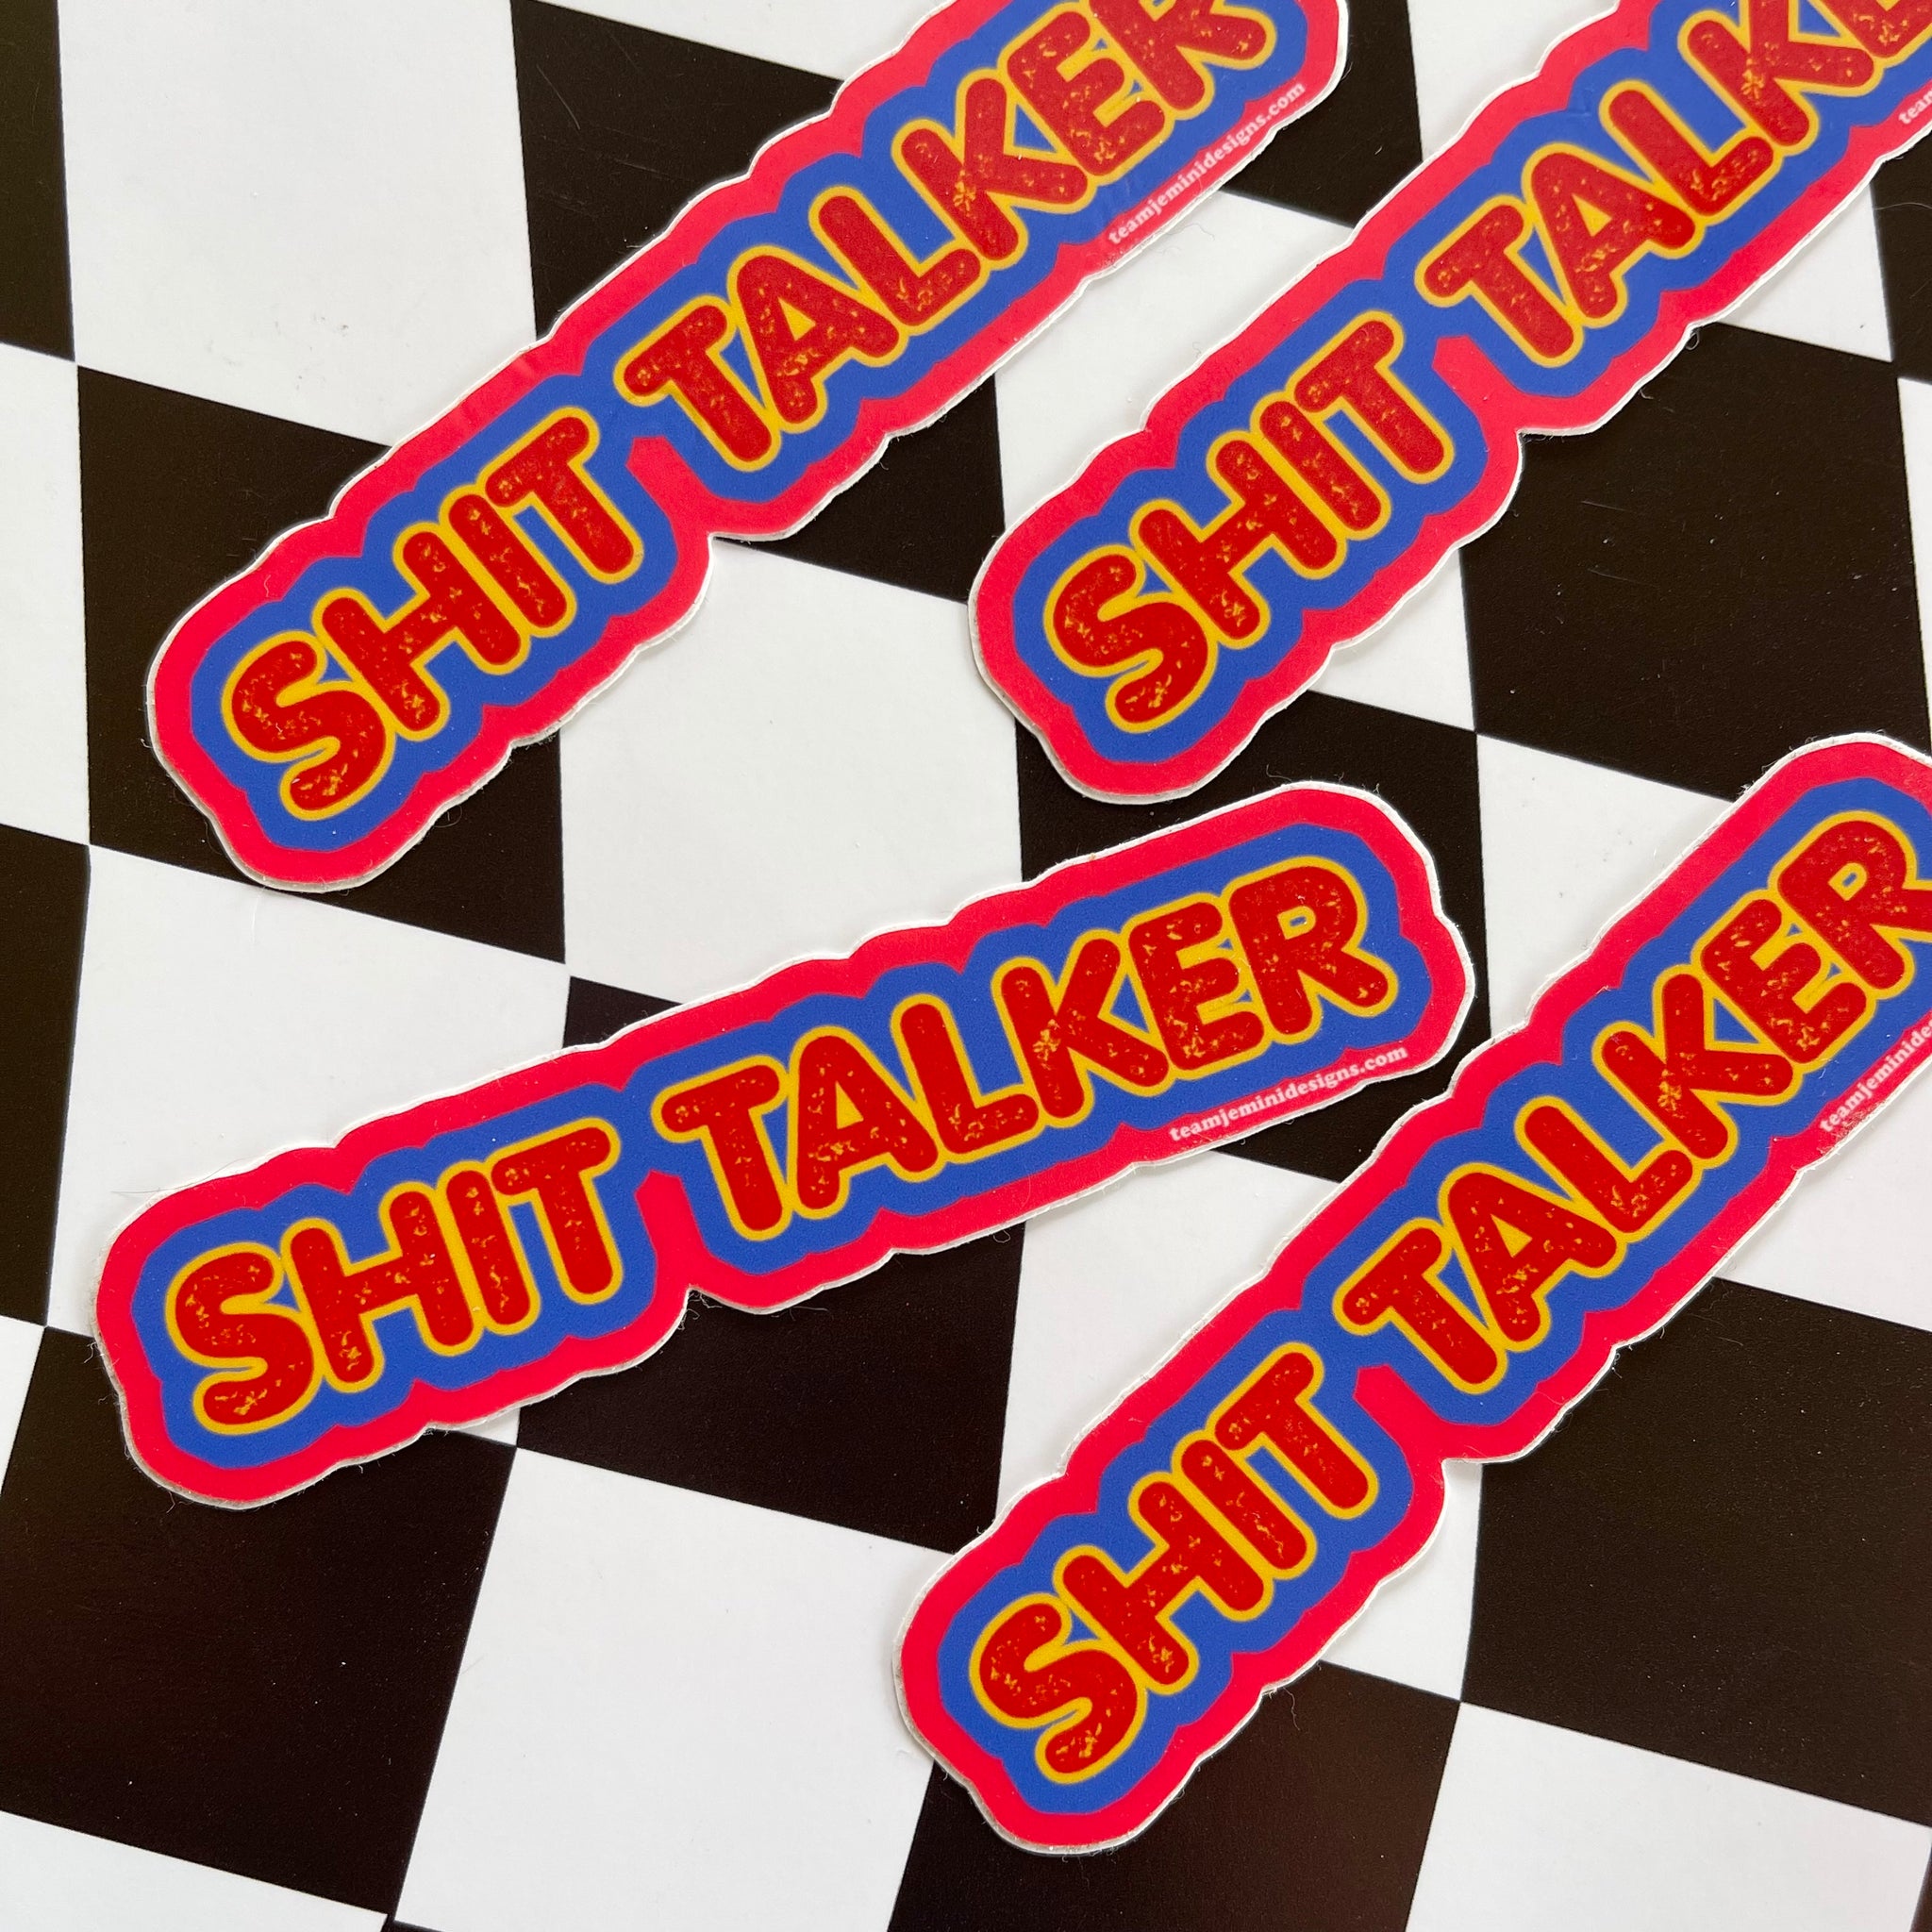 Sh*ttalker Sticker